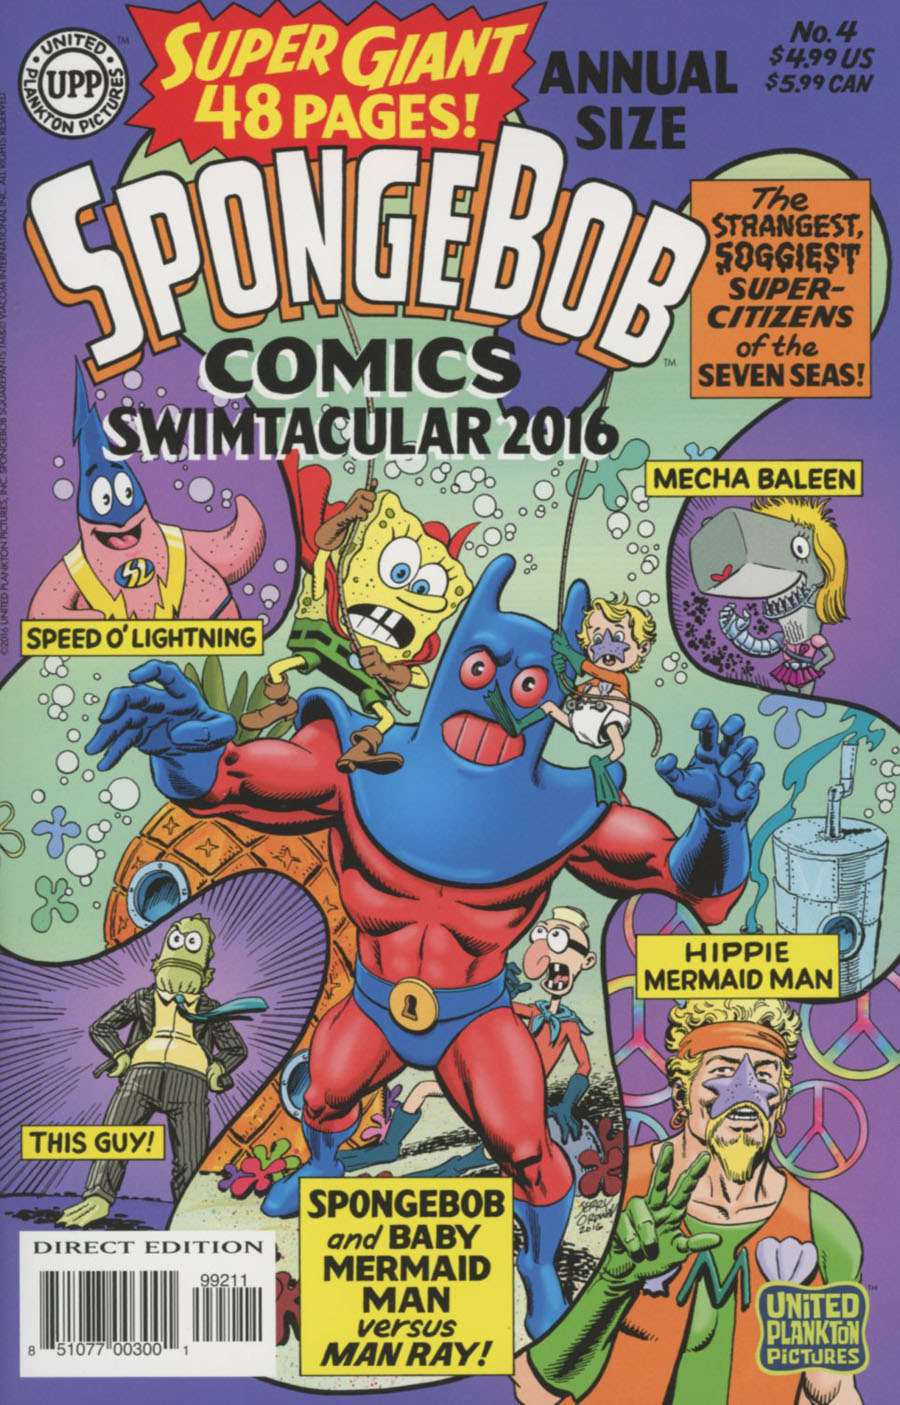 SpongeBob Comics Annual Giant Swimtacular #4